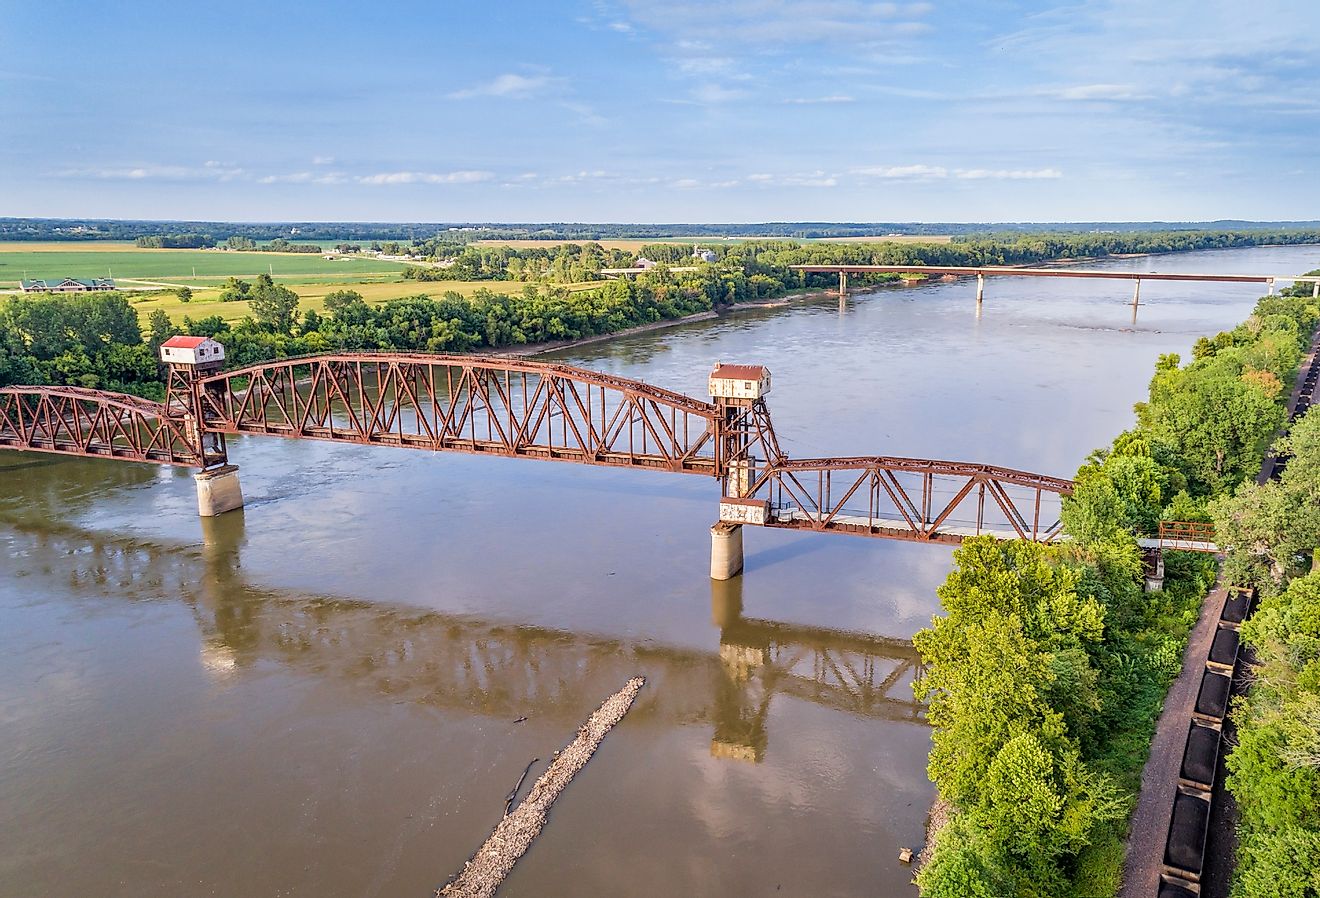 Historic Katy Bridge over the Missouri River at Boonville.